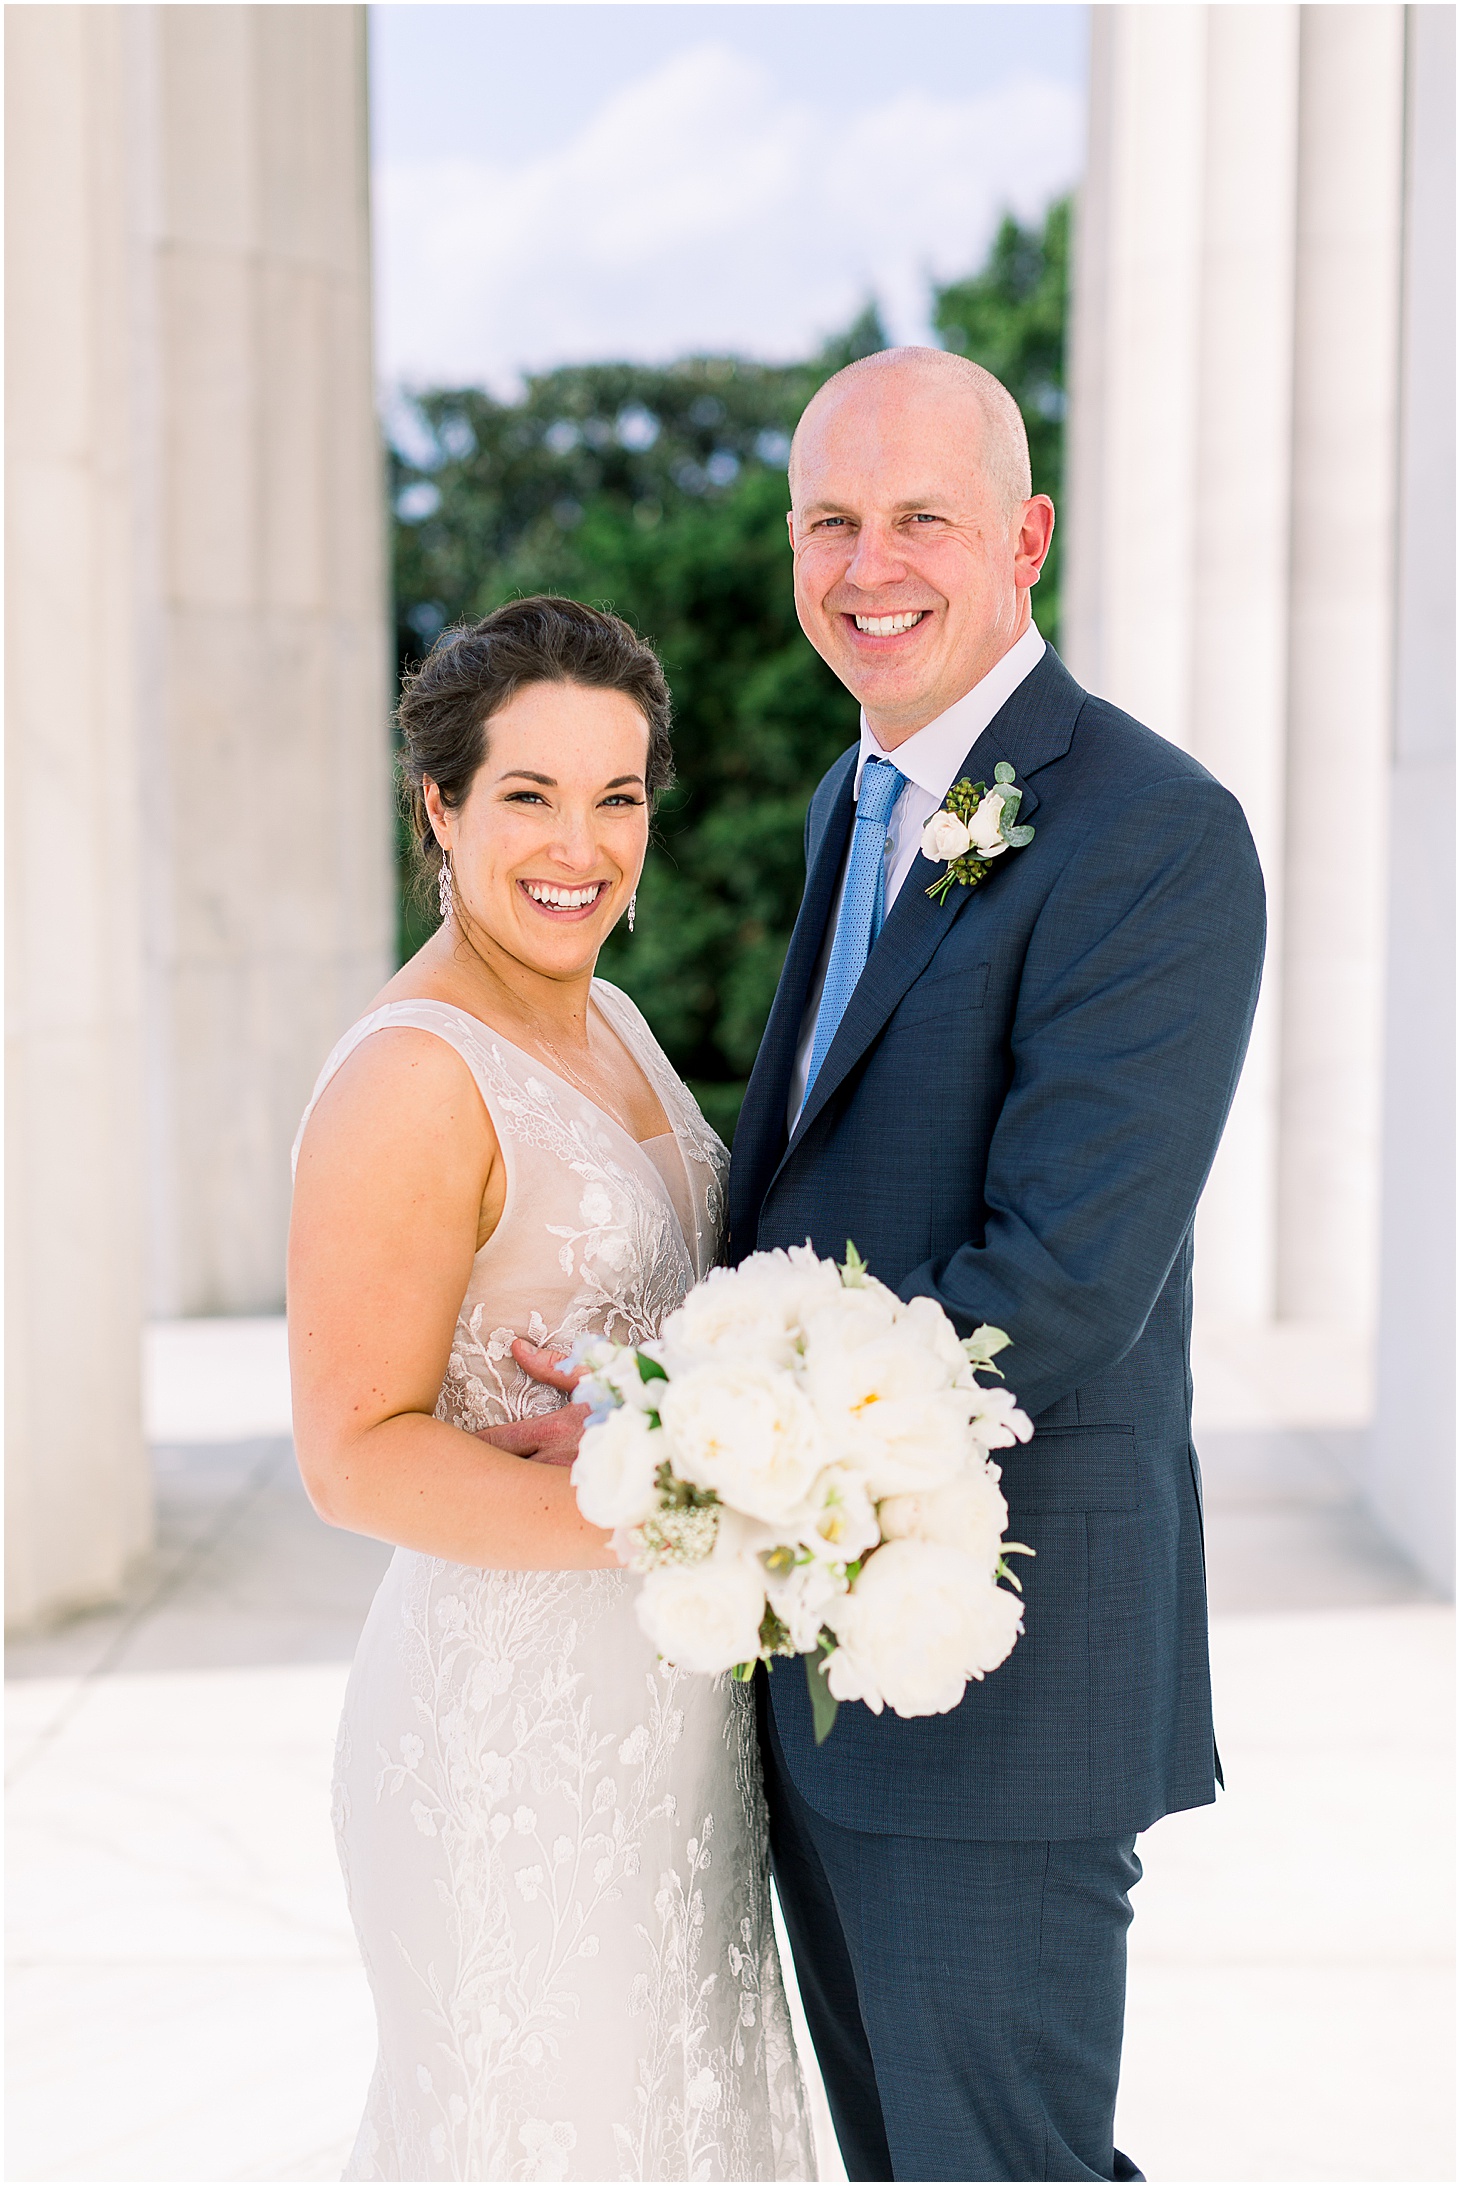 Wedding Portraits at Lincoln Memorial in DC, Romantic Spring Wedding at Dumbarton House Gardens, Sarah Bradshaw Photography